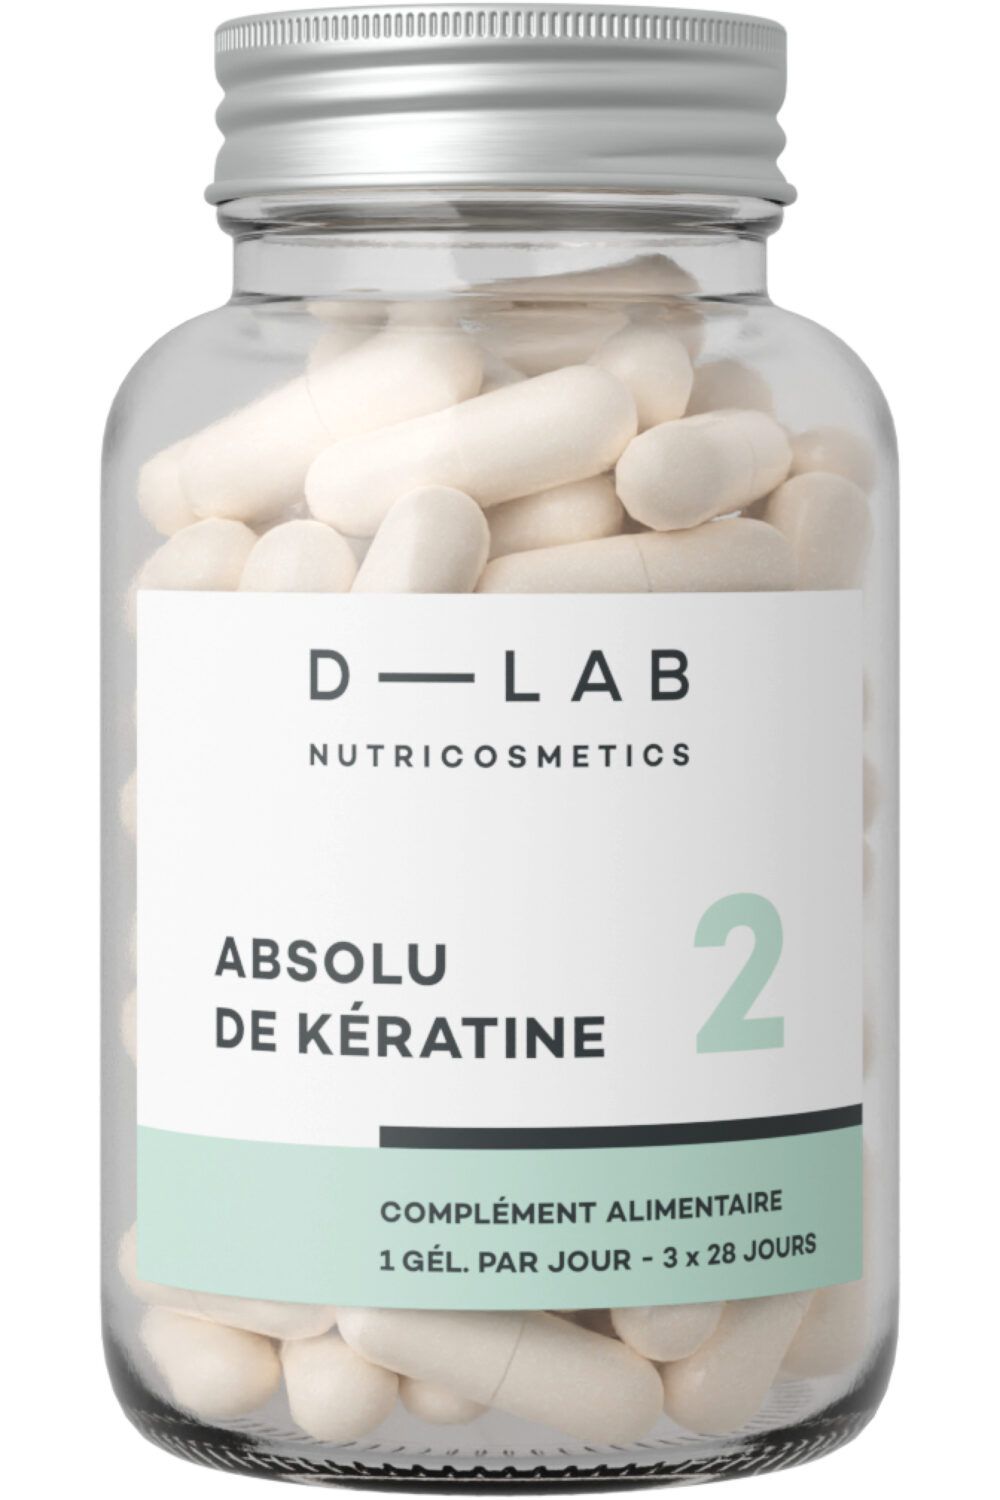 D-LAB NUTRICOSMETICS - New pack Absolution de Kératine 3 mois